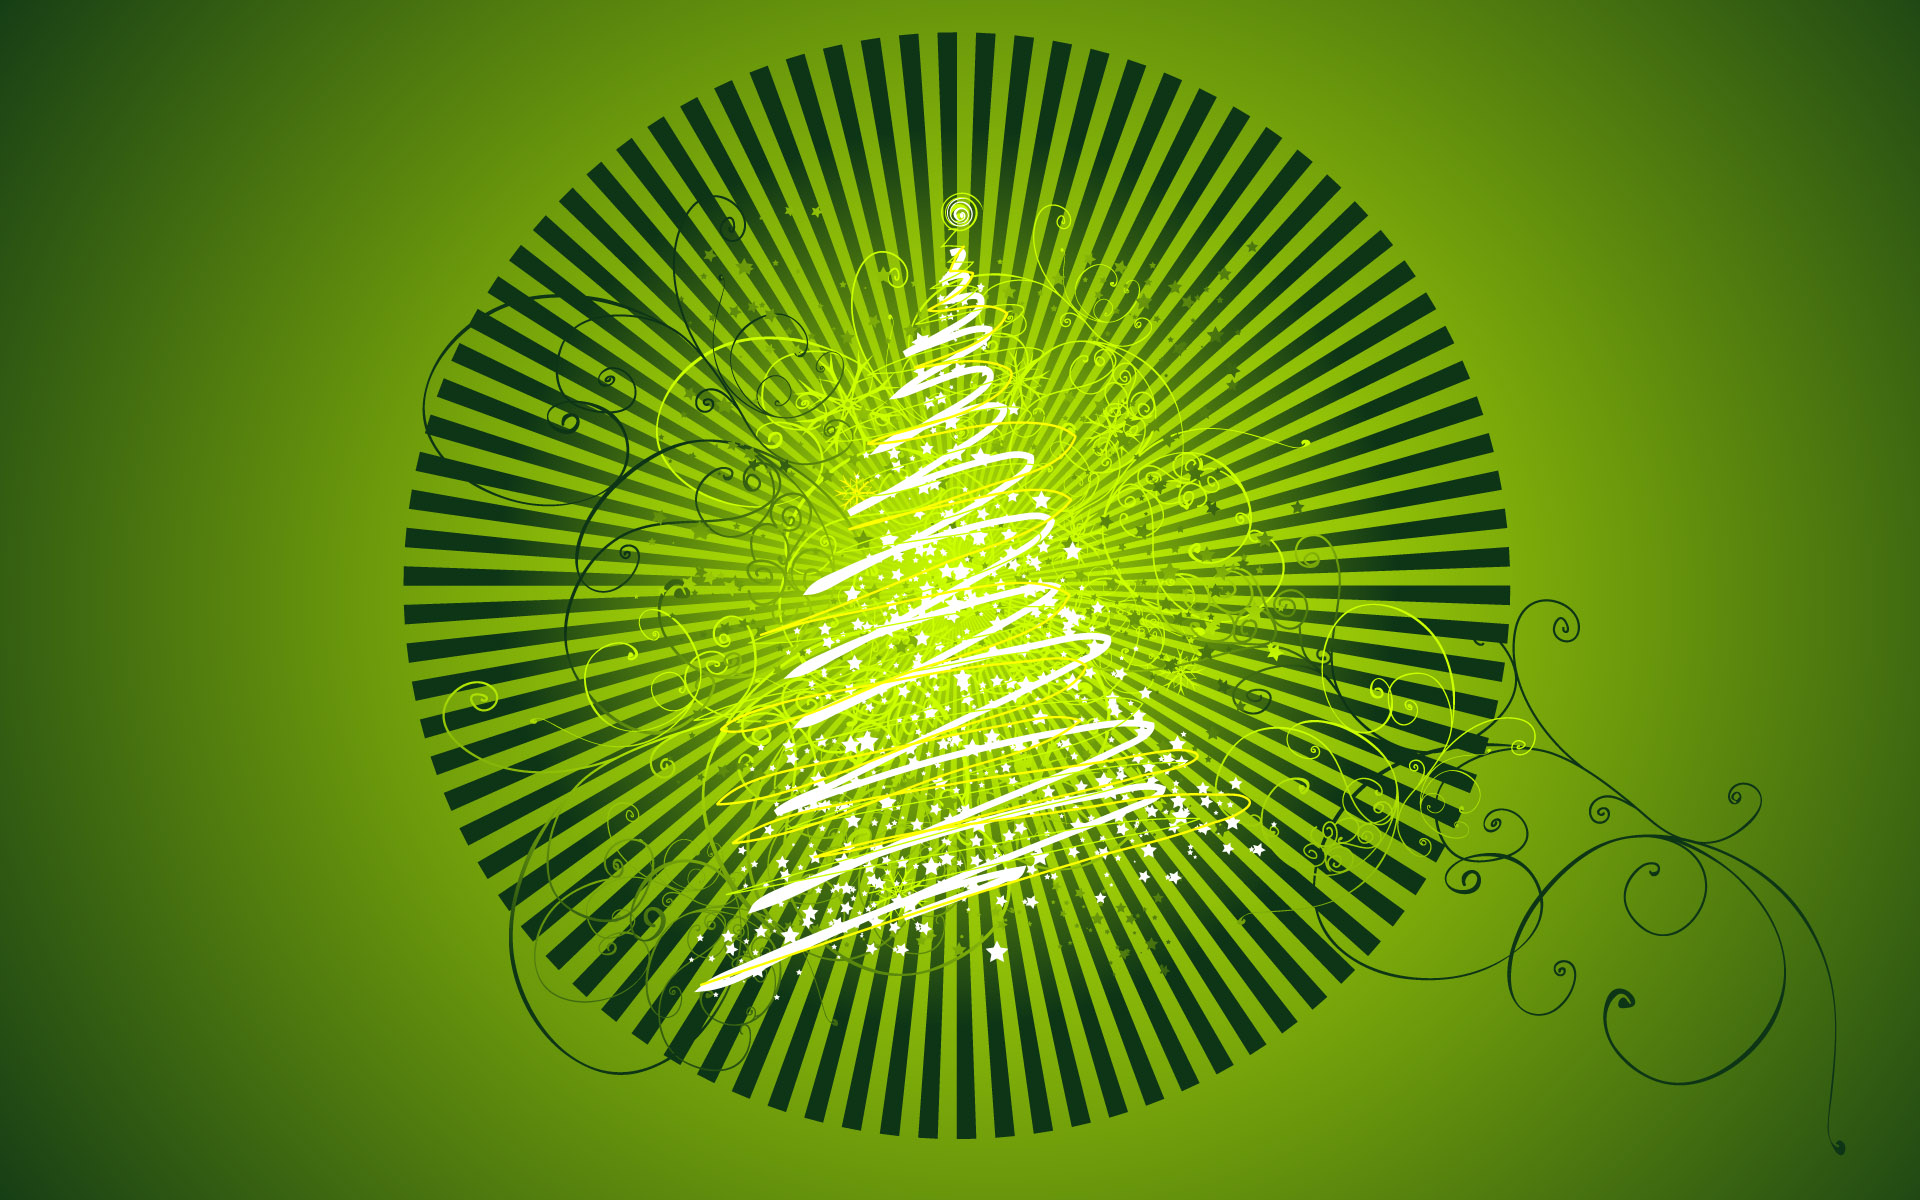 Christmas-themed minimalist green desktop wallpaper.